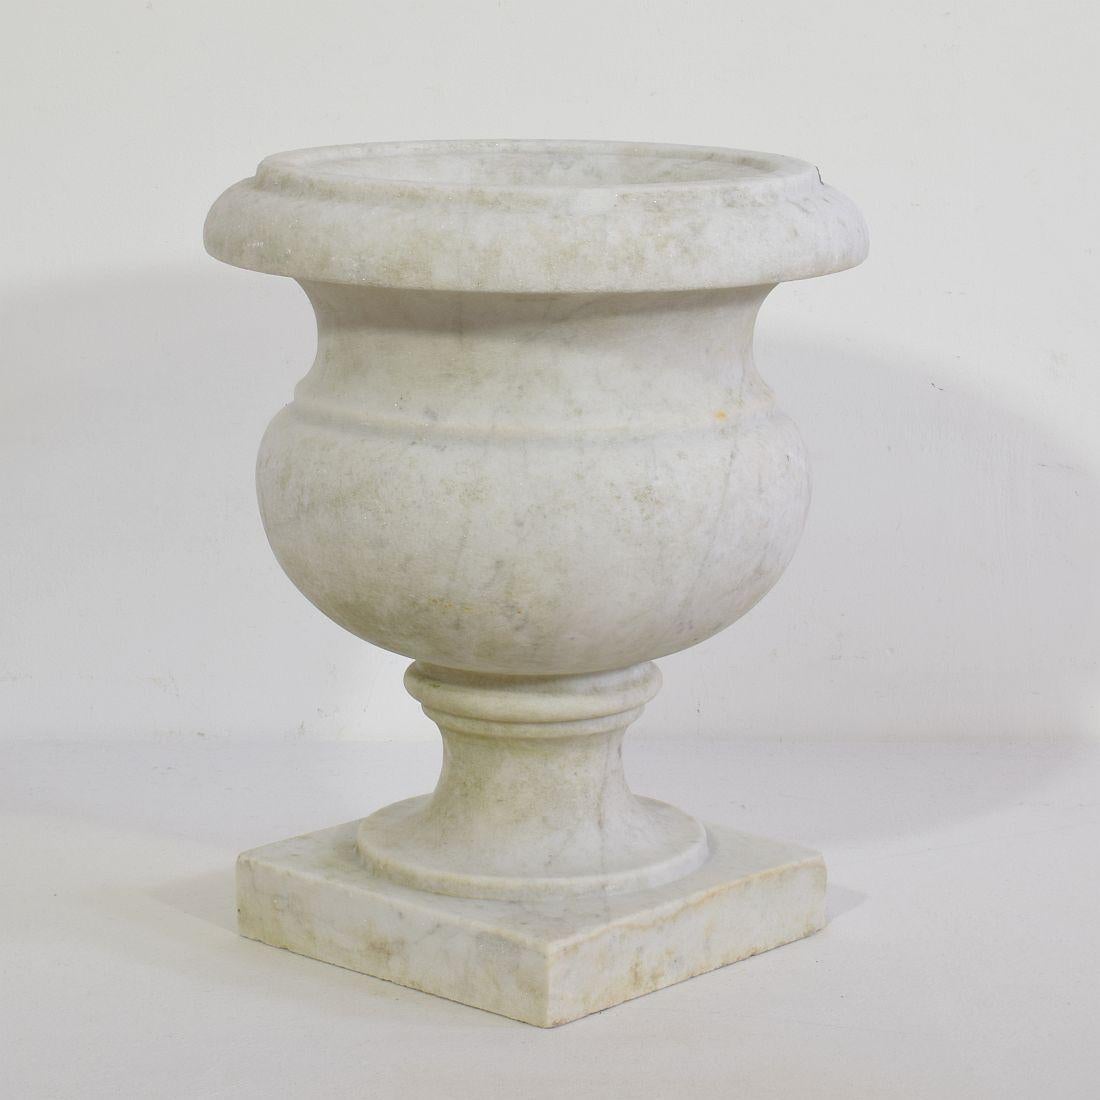 Rare white marble vase garden urn. Beautiful decorative centerpiece.
England, circa 1800-1850.
Weathered.










 